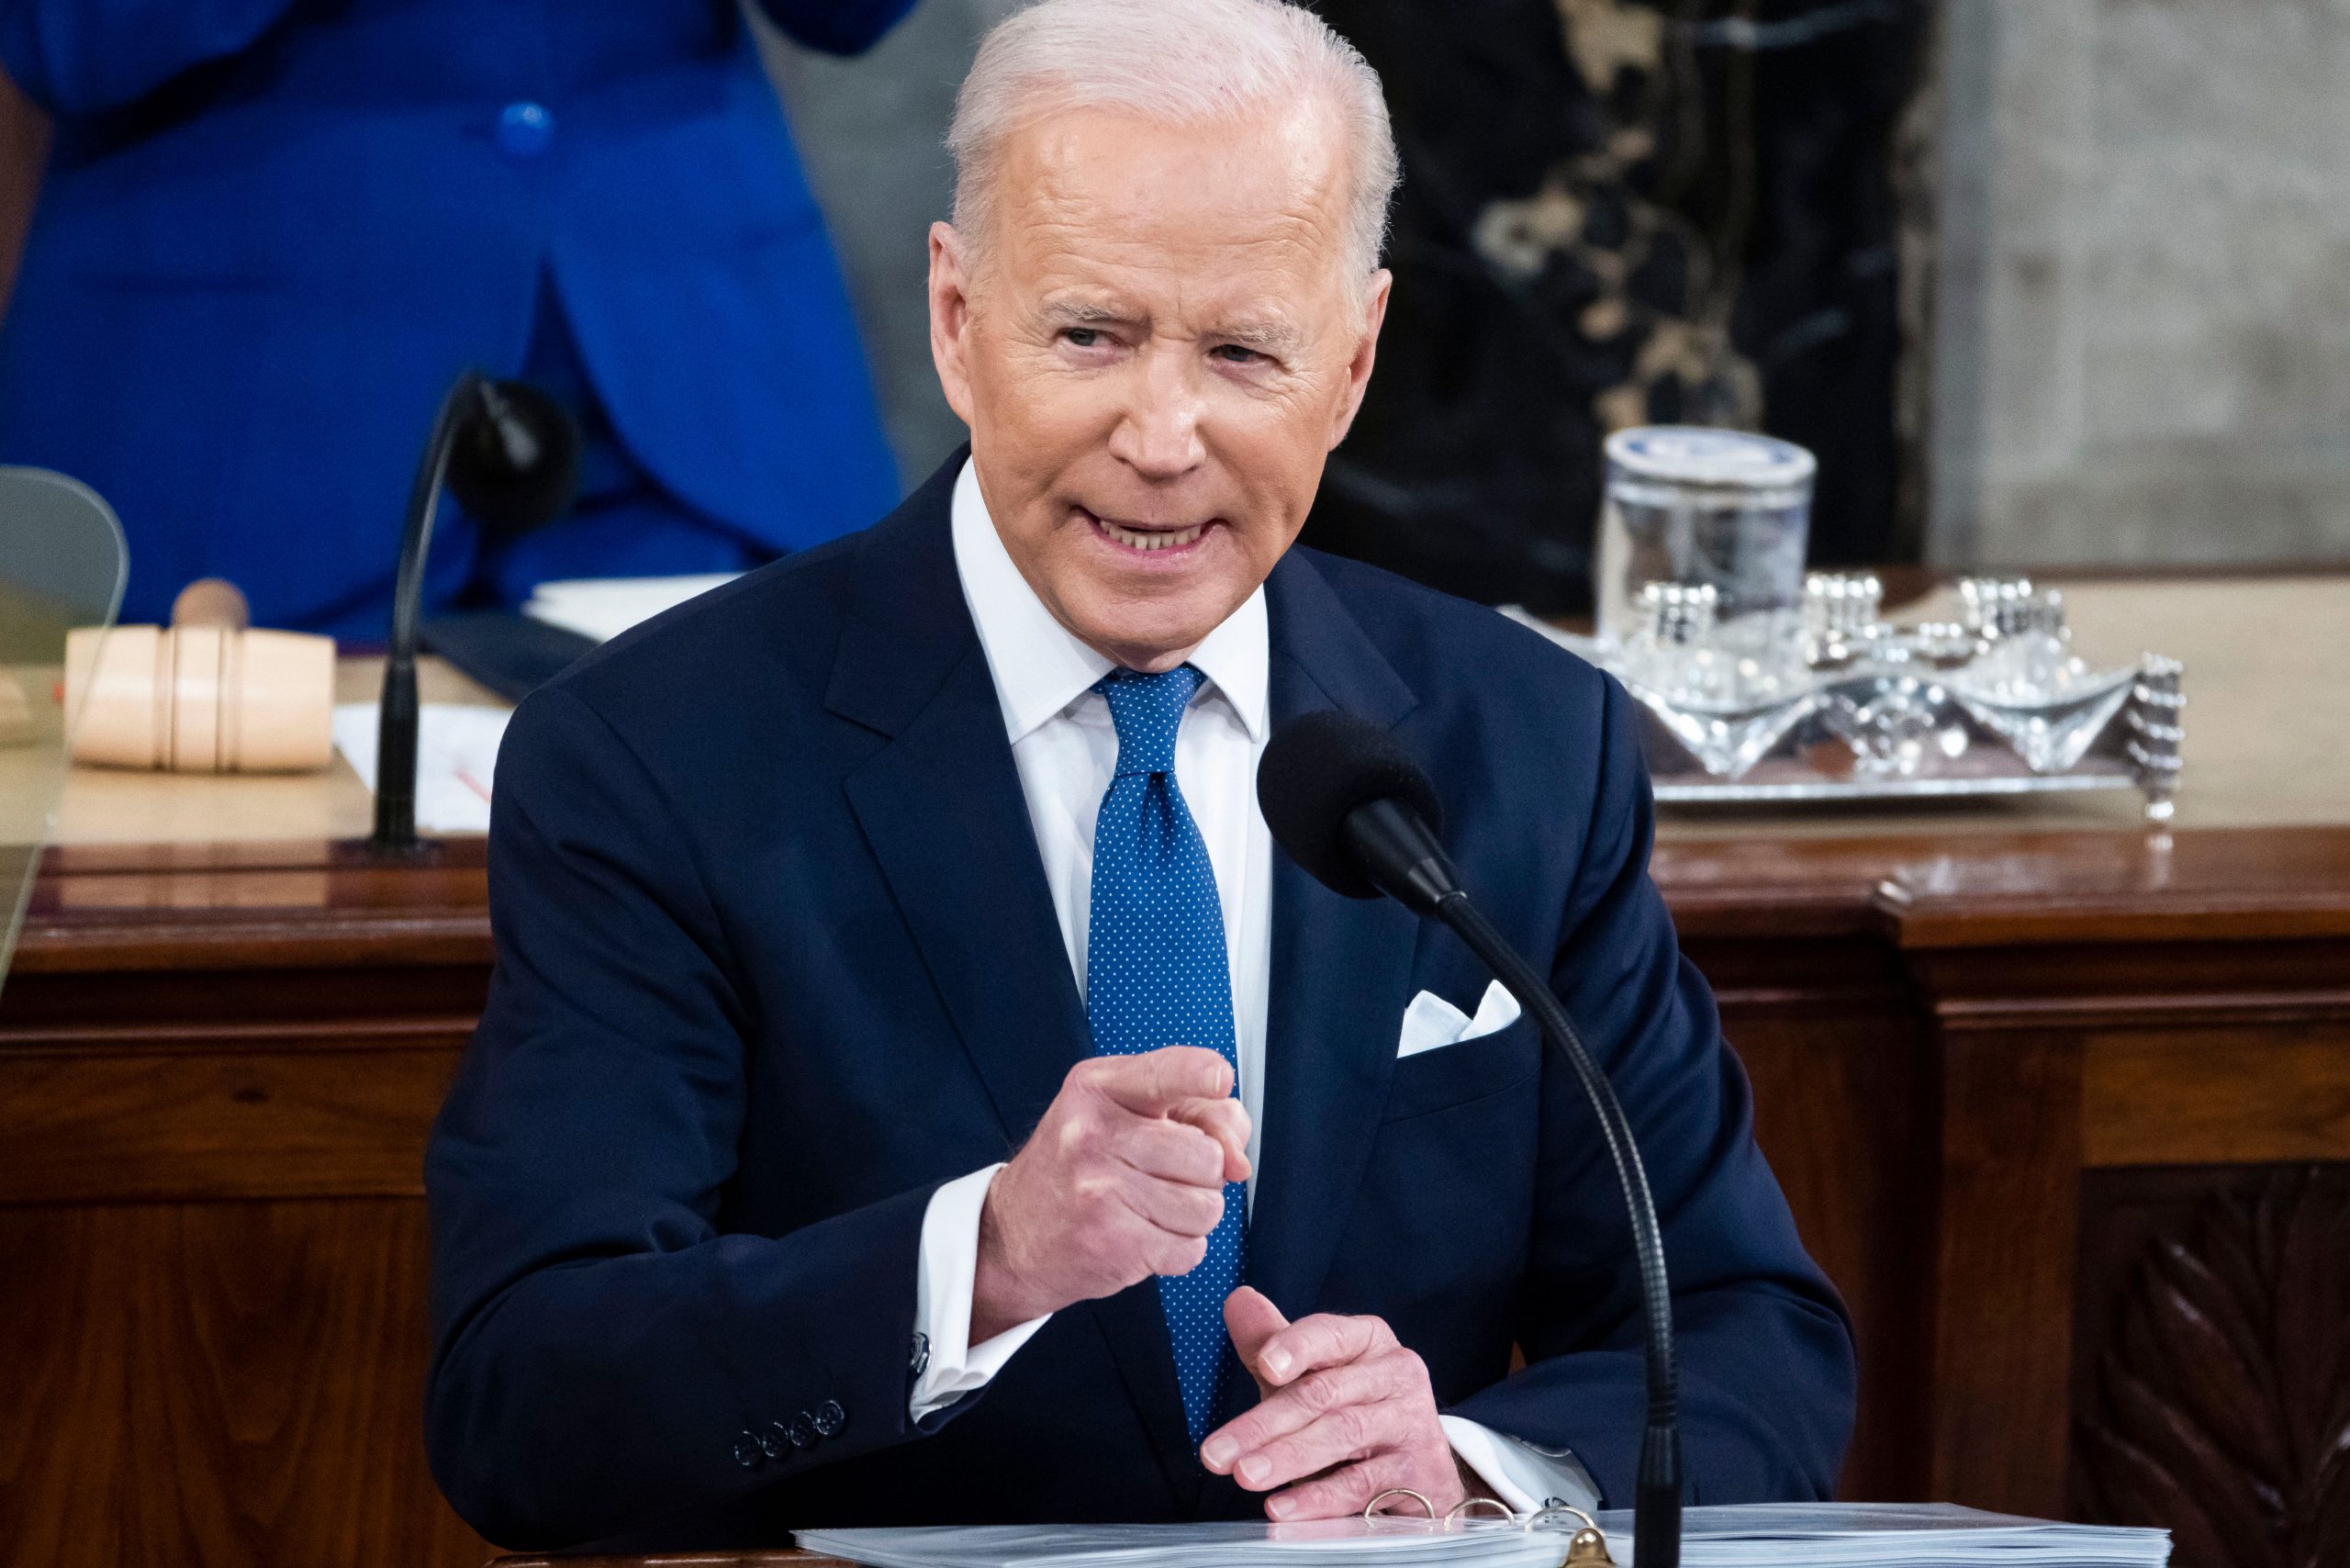 Biden calls Putin ‘war criminal’ over Ukraine crisis